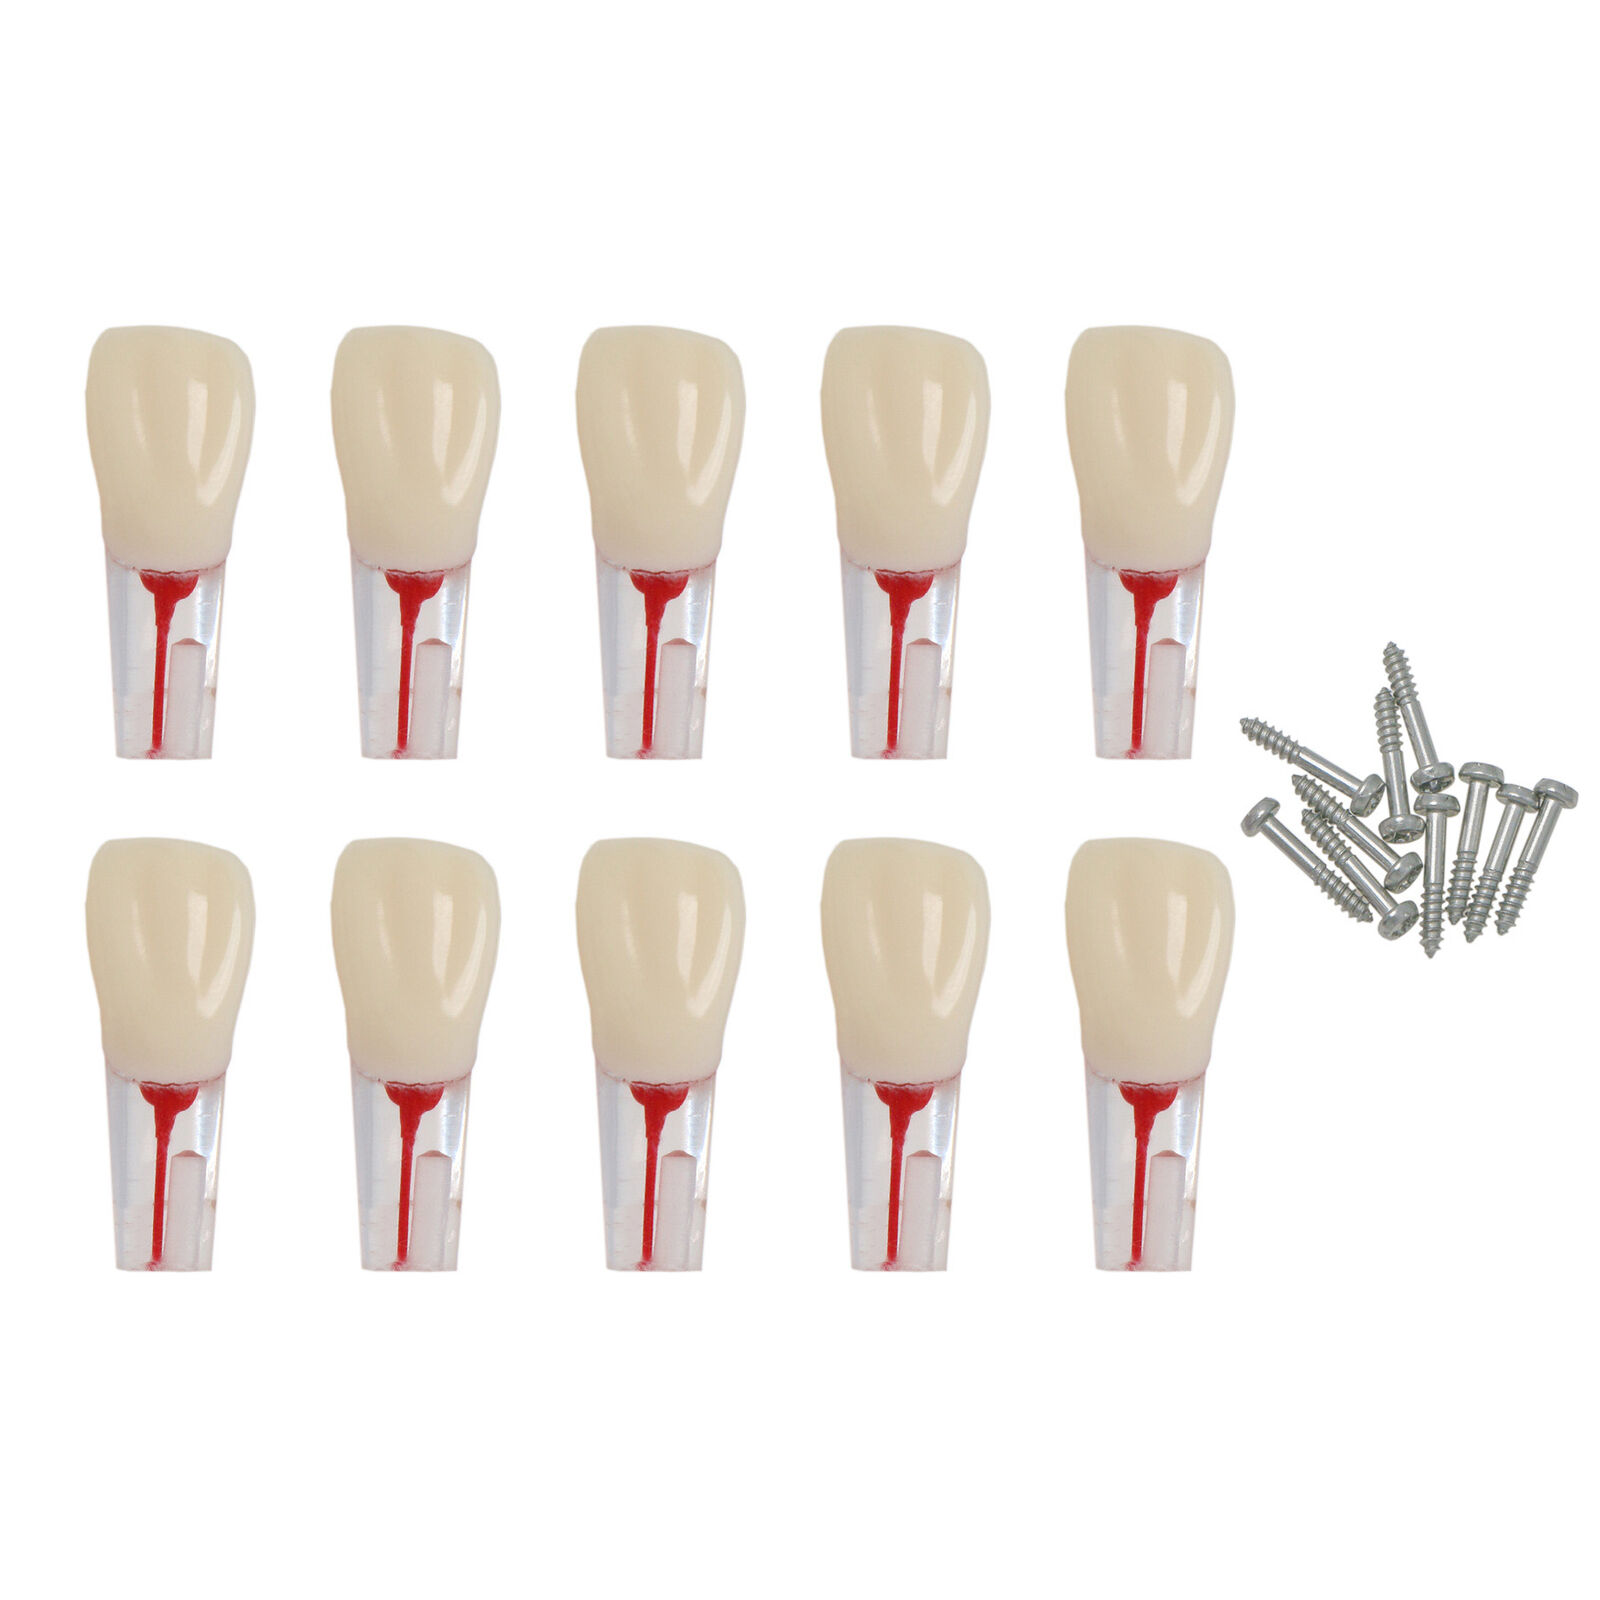 10PCS Kilgore Nissin Type Dental Endo Root canal Practise Typodont Teeth Model